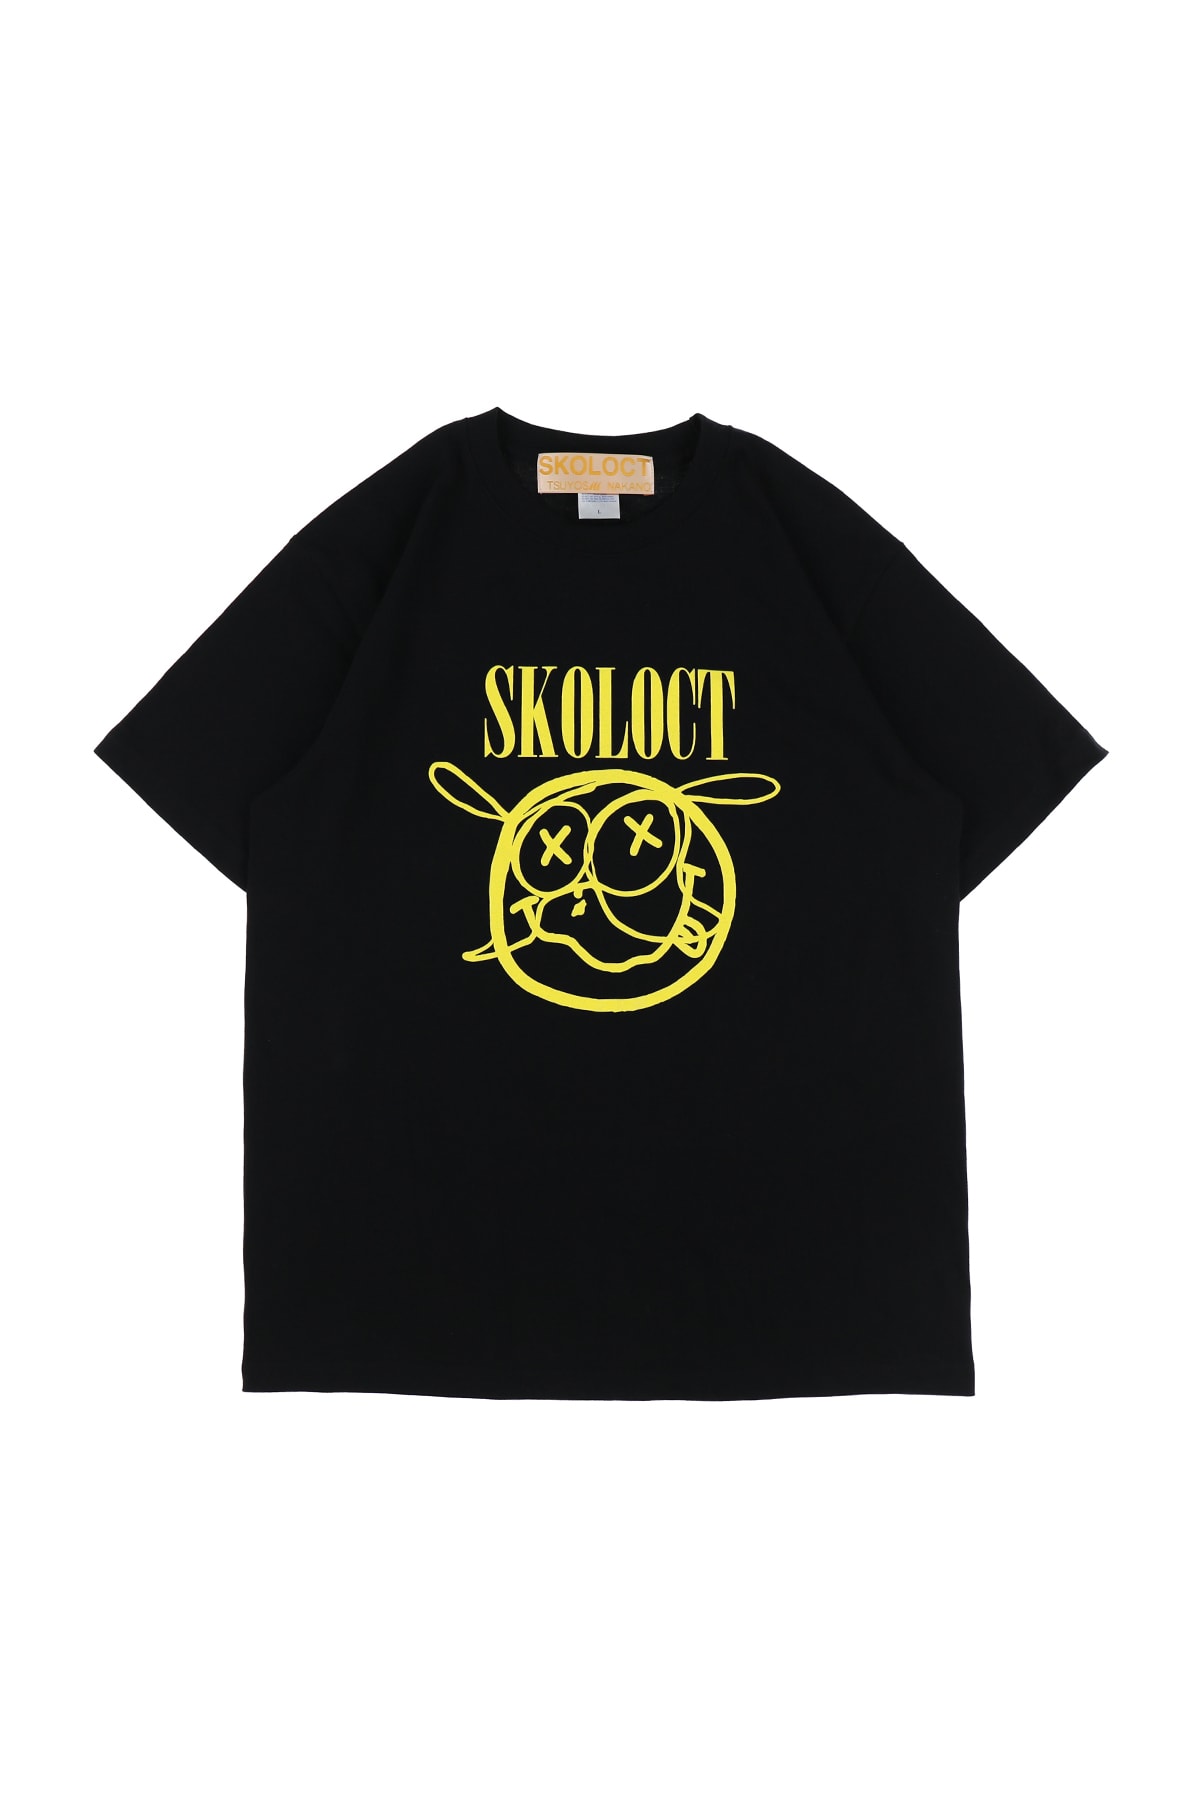 SKOLOCT EMPTY R _ _ M Exclusive Capsule T Shirt Overalls Art Print